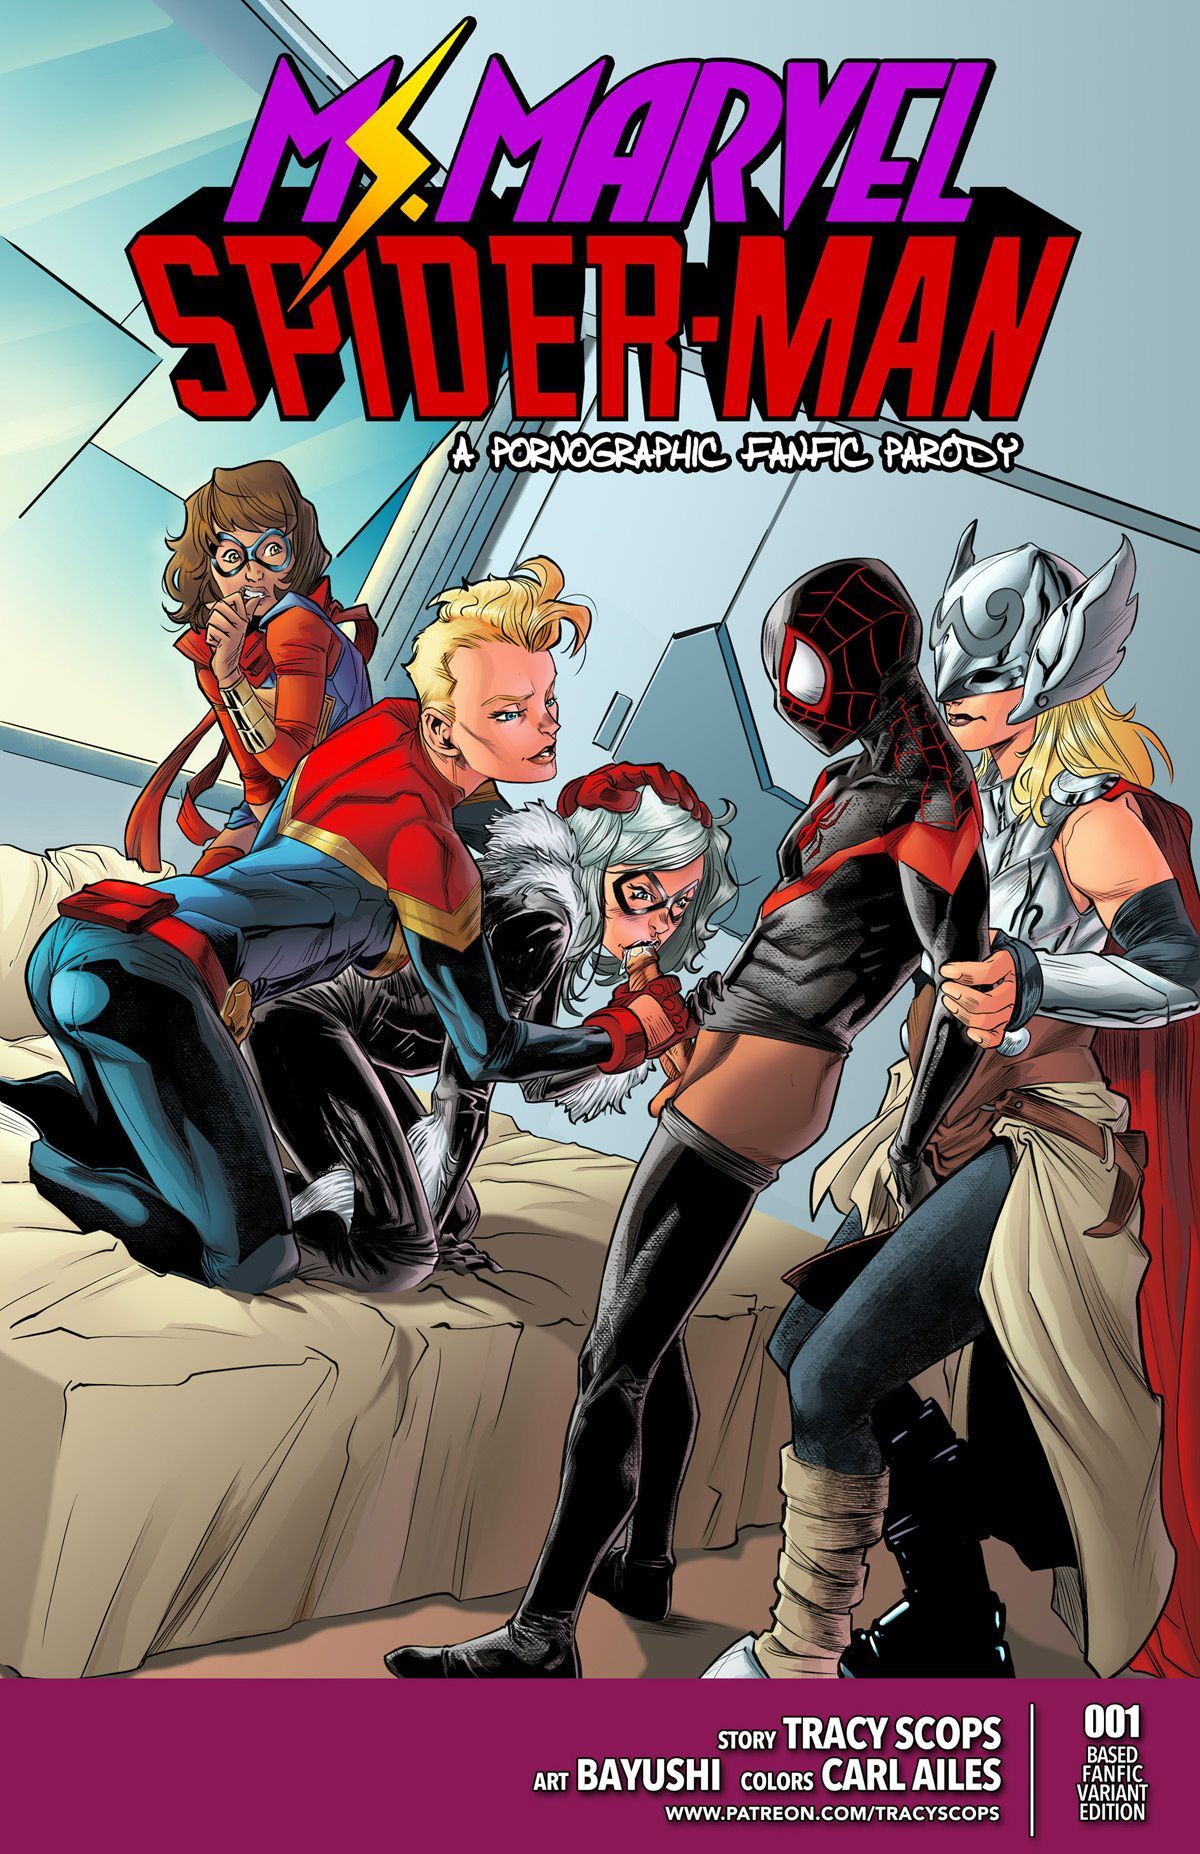 Ms. Marvel - Spider-Man: A pornographic fanfic parody porn comic